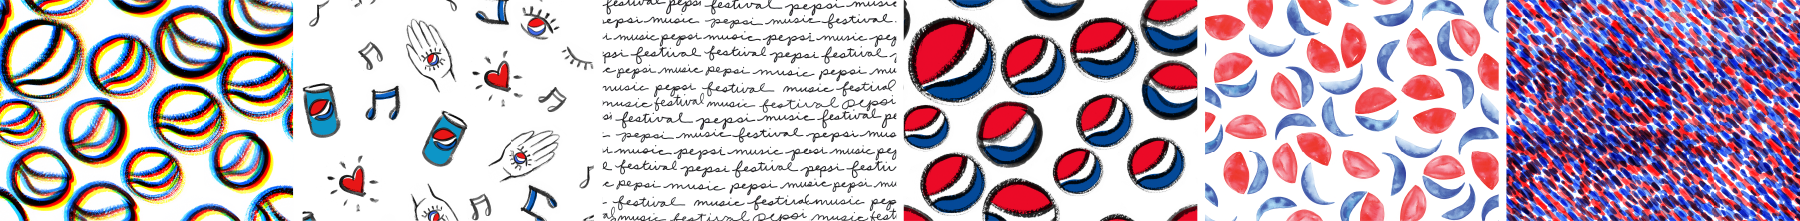 Pepsi Festival Patterns